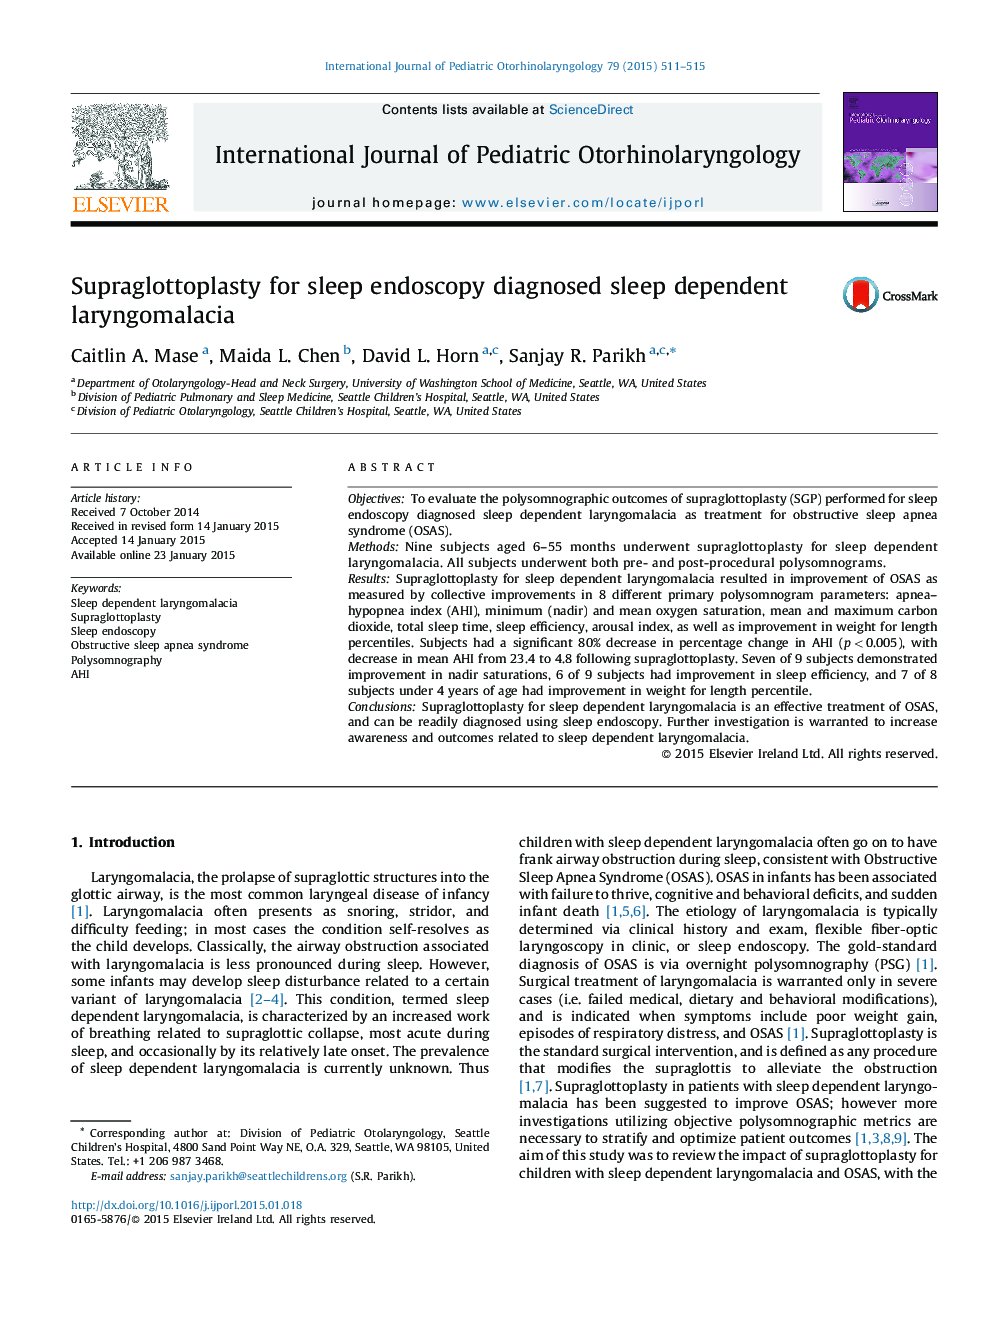 Supraglottoplasty for sleep endoscopy diagnosed sleep dependent laryngomalacia